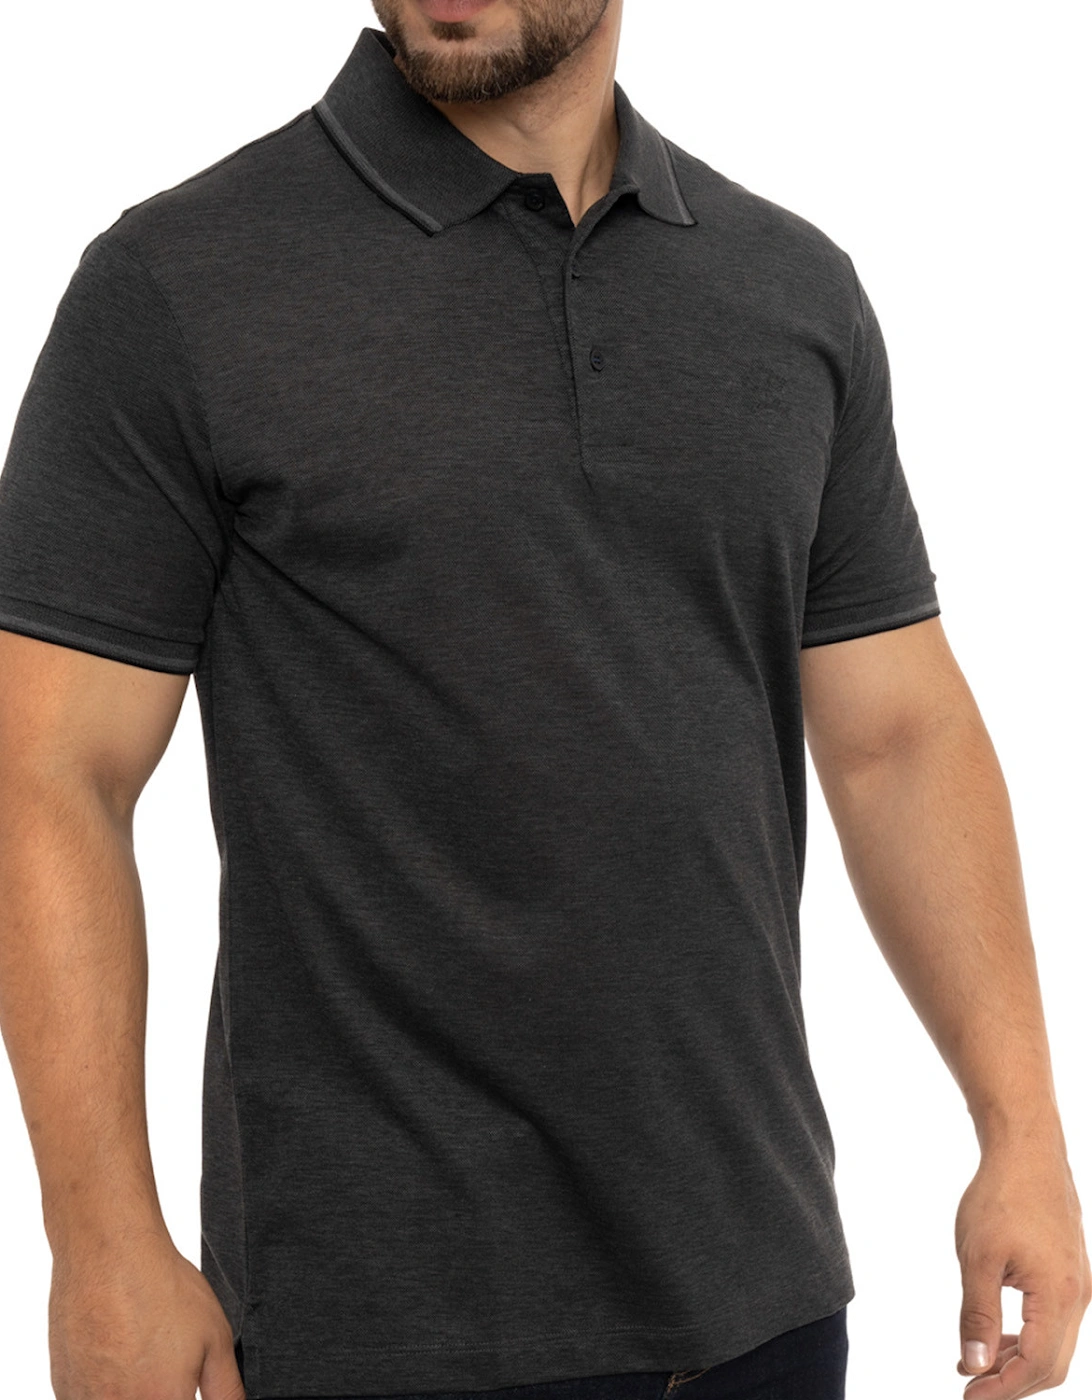 Mens 3-1 Kompact Tech Polo Shirt (Black)